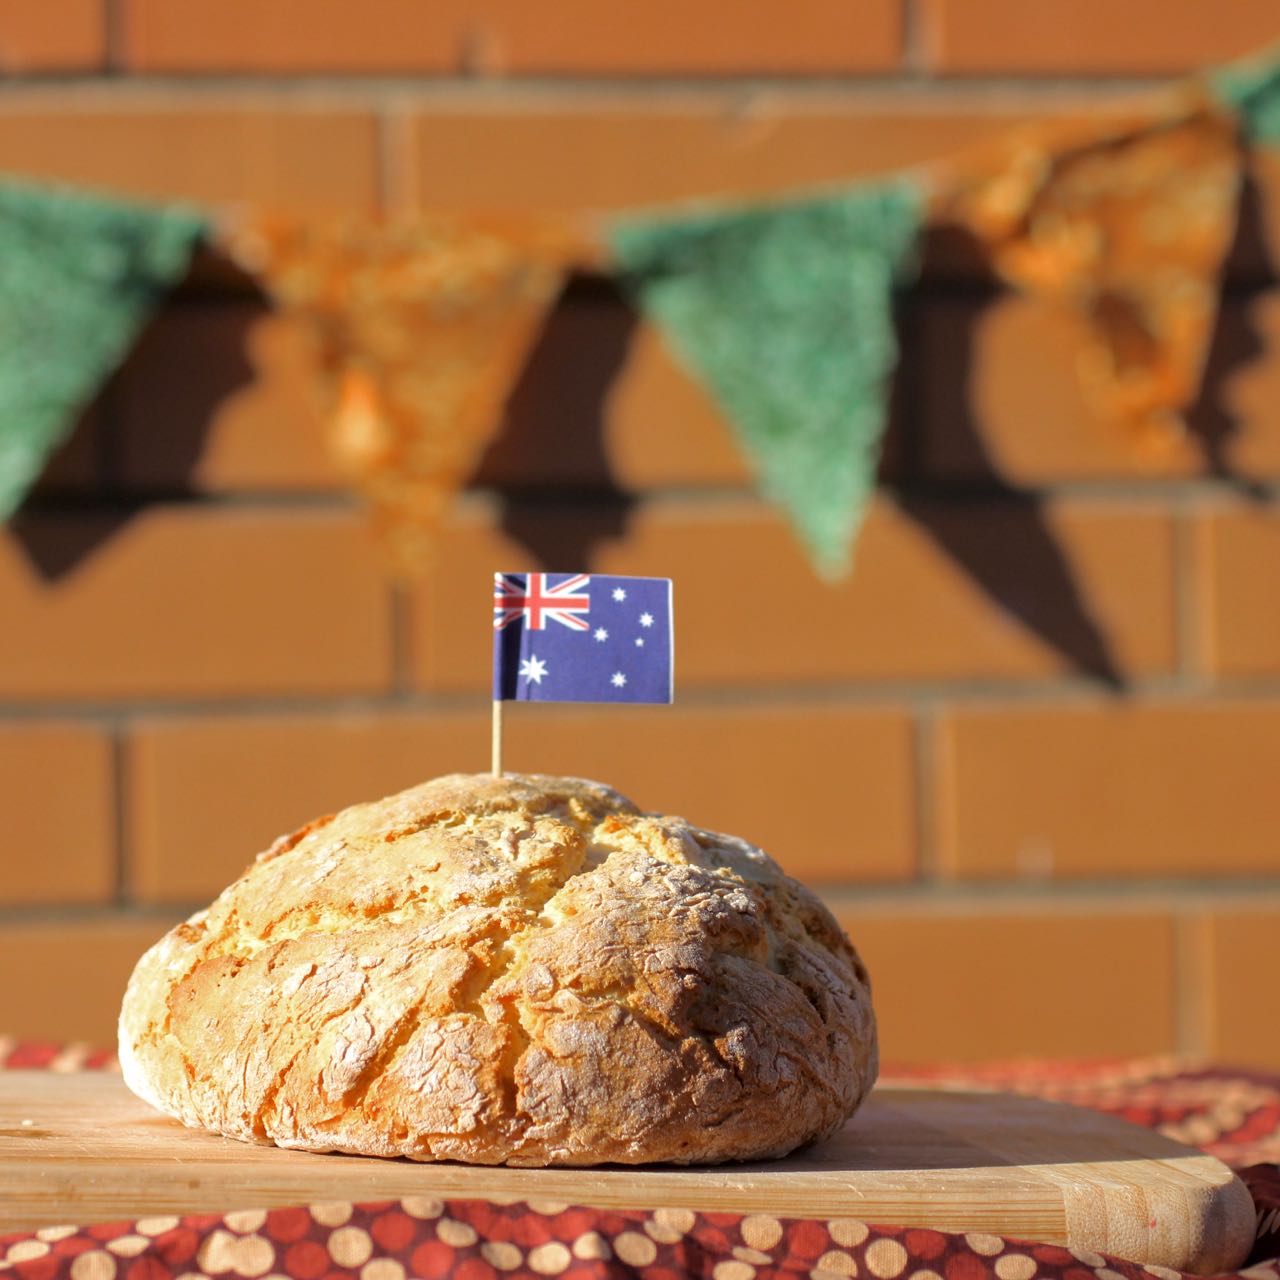 Green Gourmet Giraffe: Damper: traditional Australian campfire bread